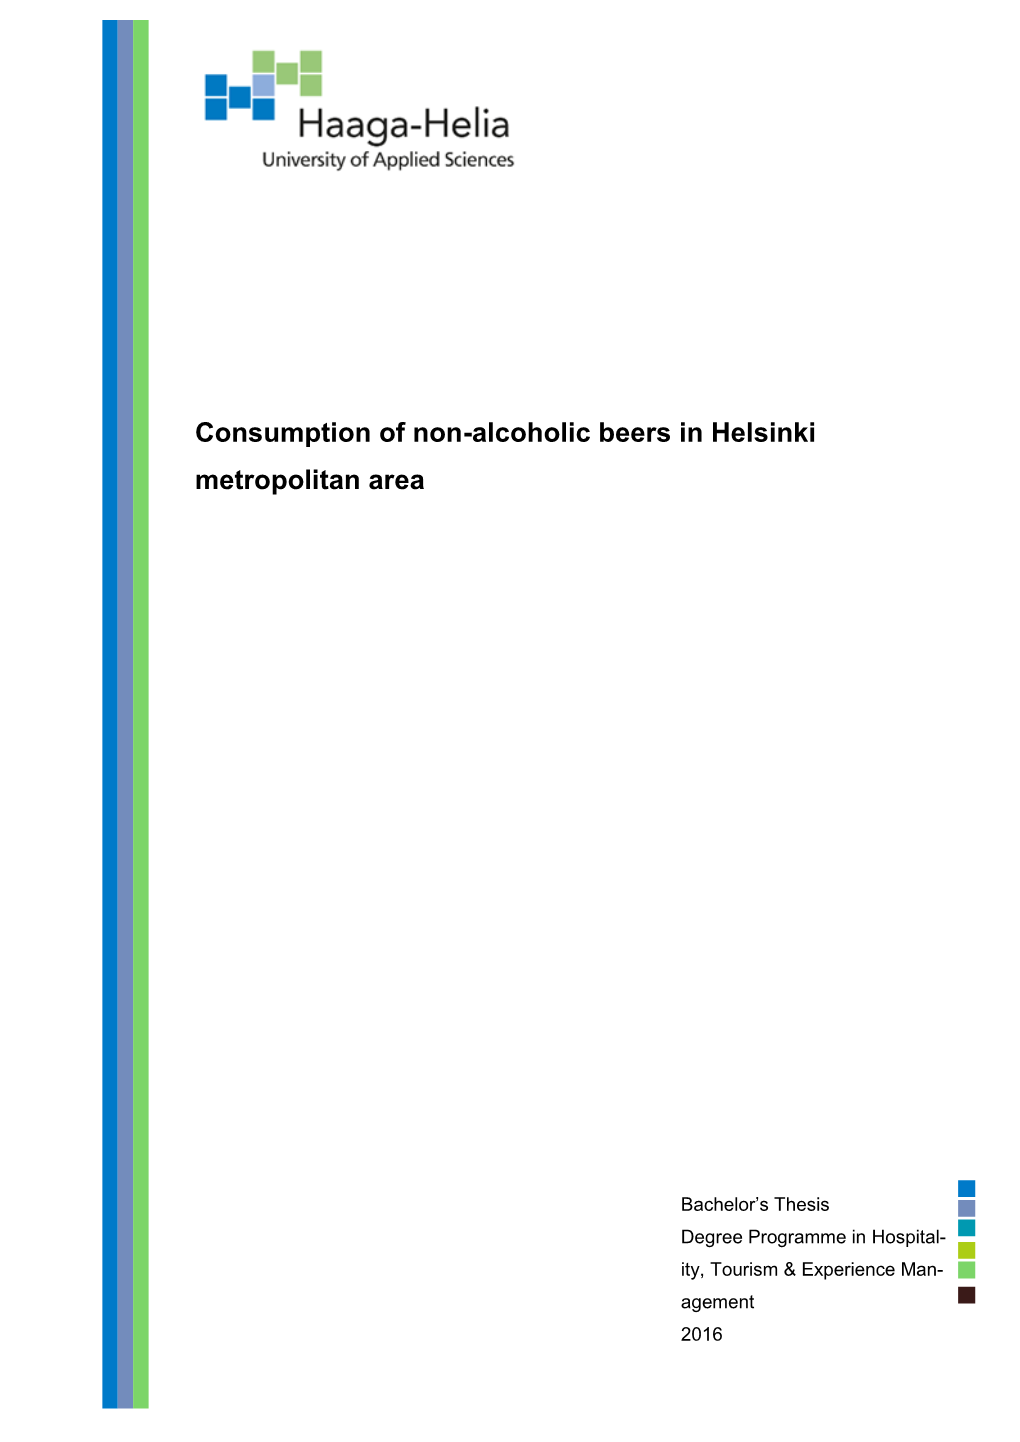 Consumption of Non-Alcoholic Beers in Helsinki Metropolitan Area